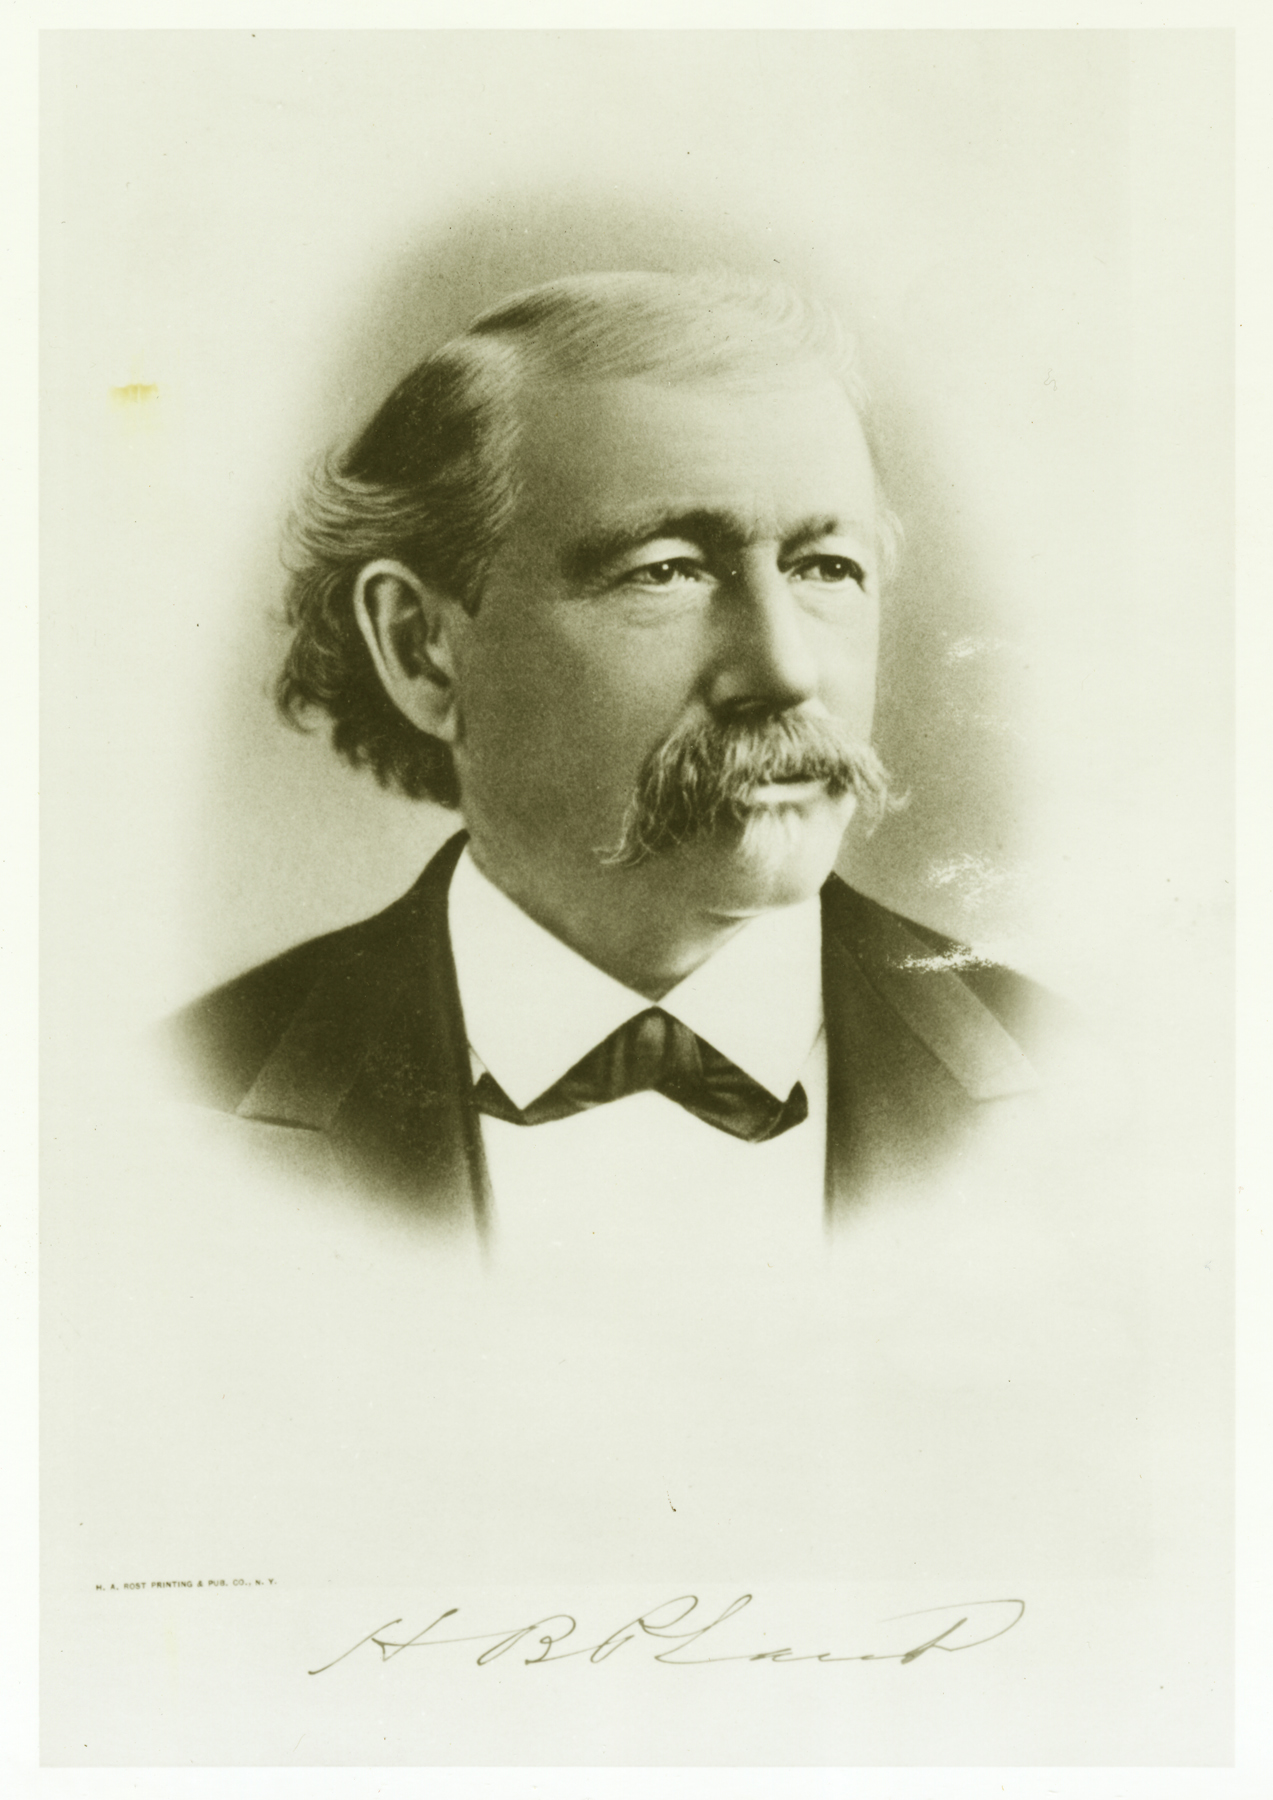 portrait of man with mustache wearing suit jacket